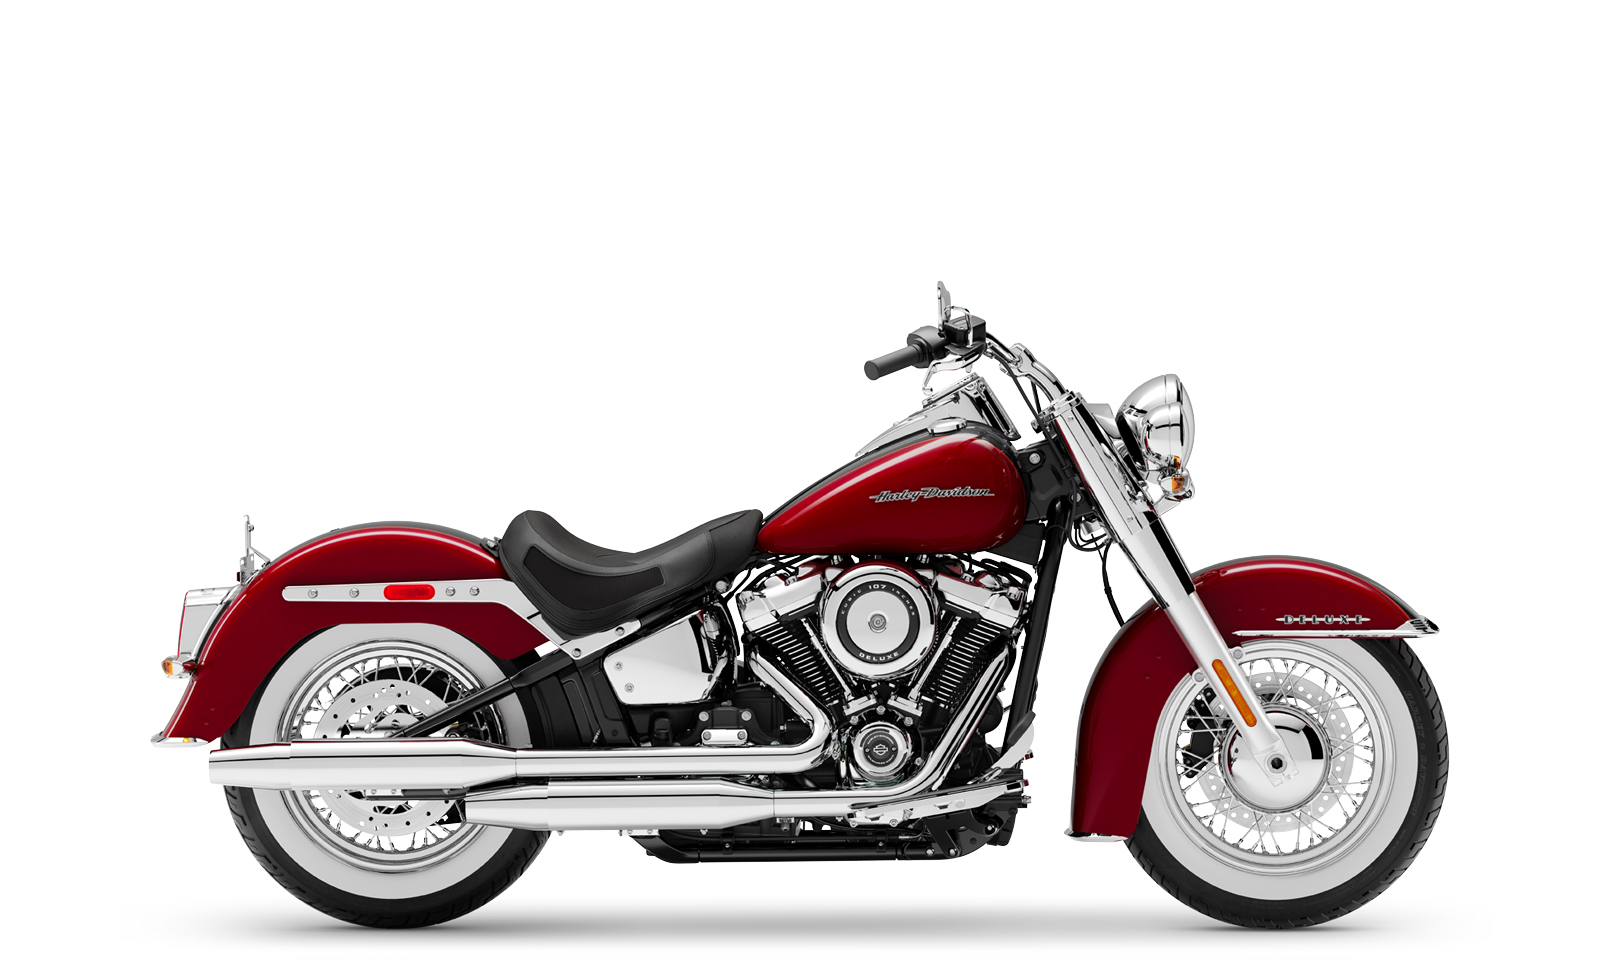 2020 Deluxe Motorcycle Harley Davidson Europe